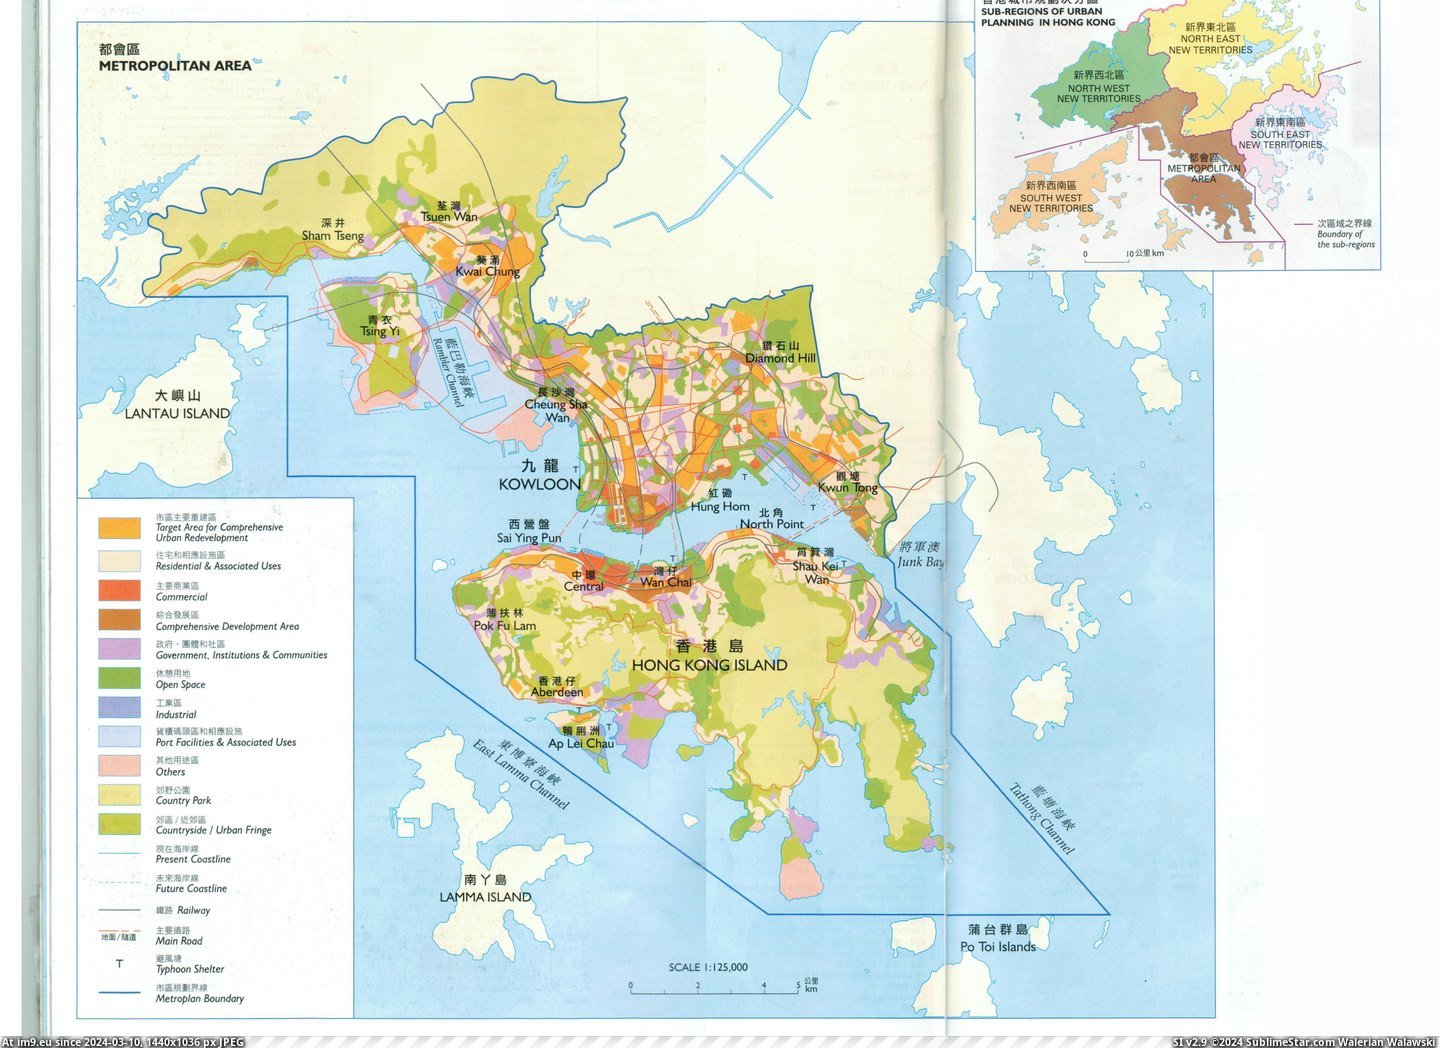 #Metropolitan #Area #Kong #Land #Hong [Mapporn] Land Use of the Metropolitan Area of Hong Kong [4076x2945] Pic. (Изображение из альбом My r/MAPS favs))